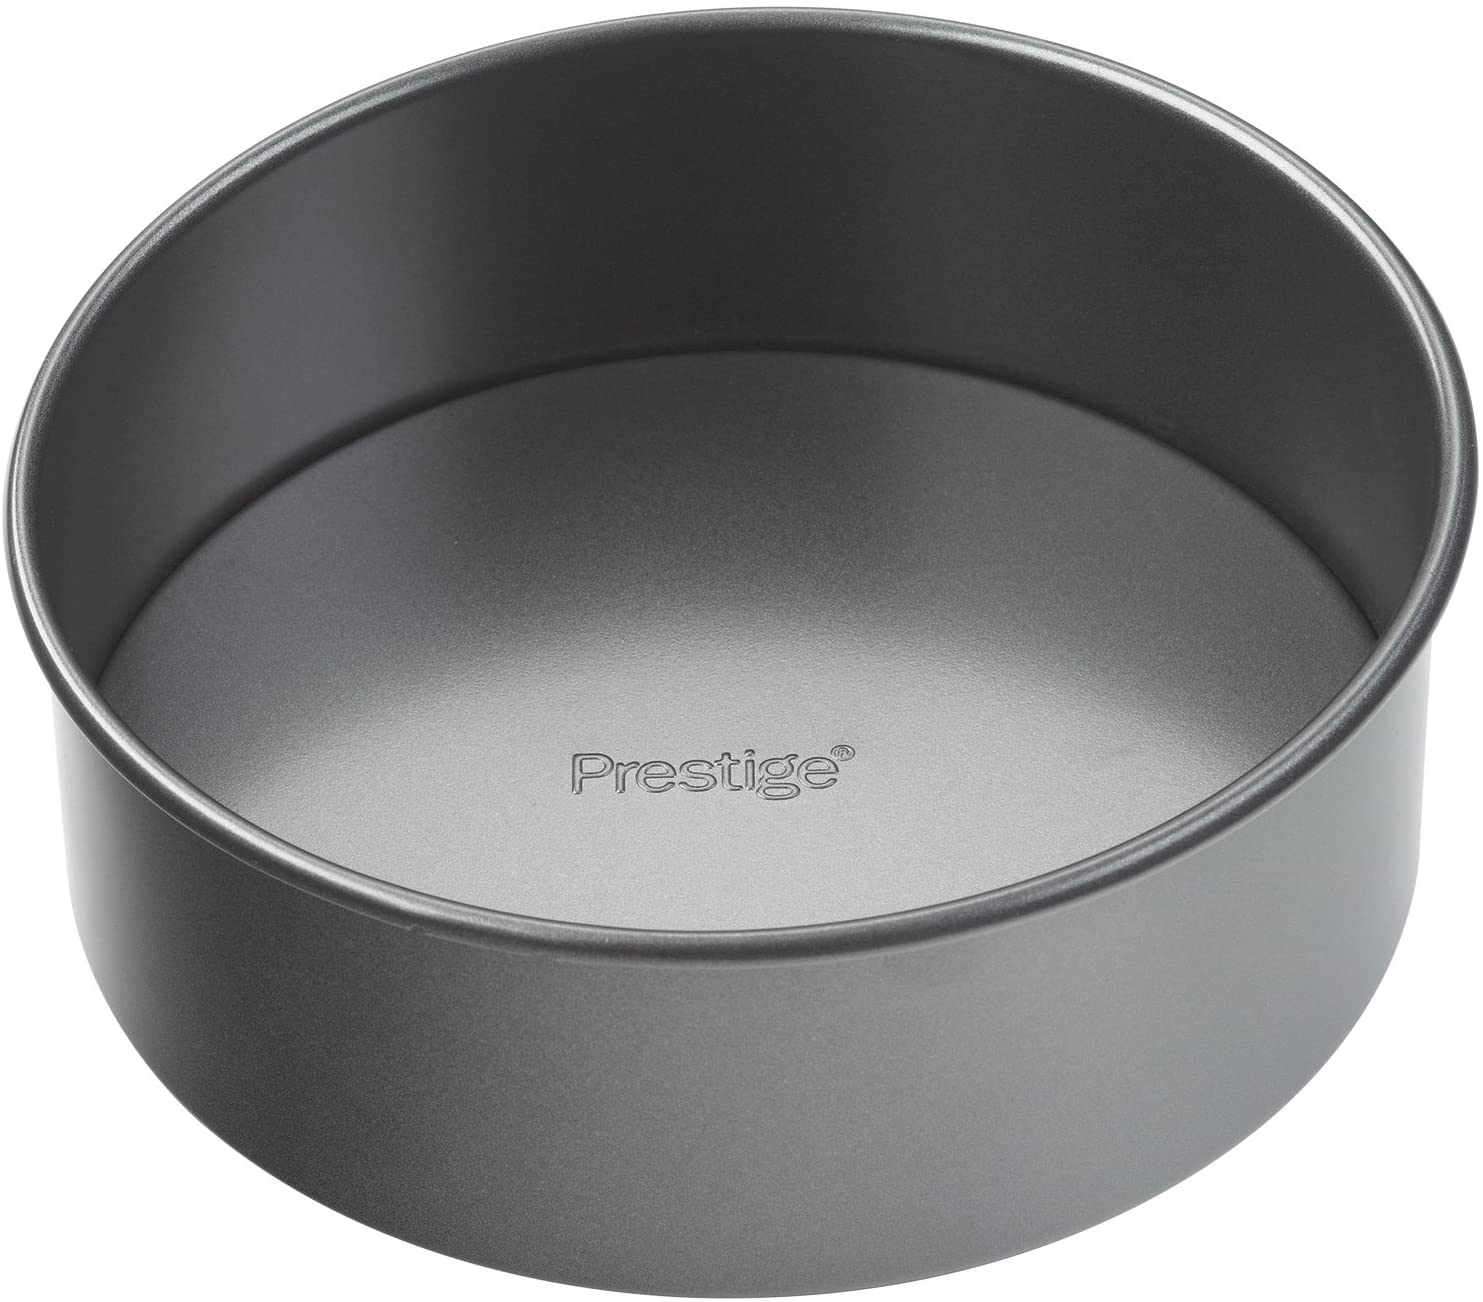 Prestige Steel 8-Inch Loose Base Round Cake Tin, Black